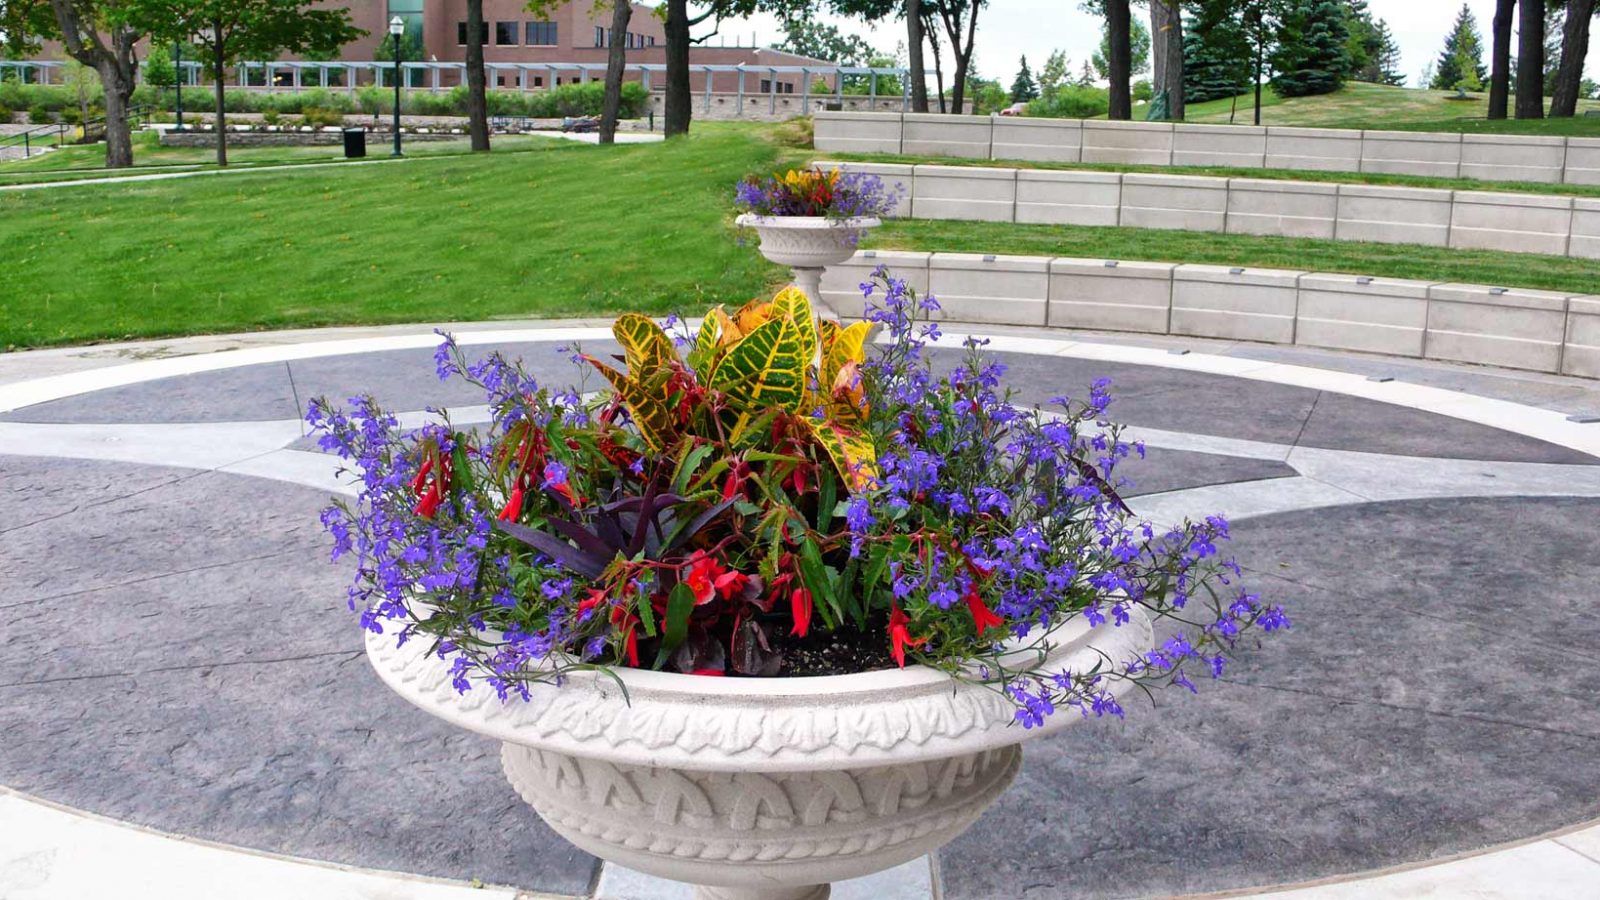 flowers in urn pose irrigation design challenges